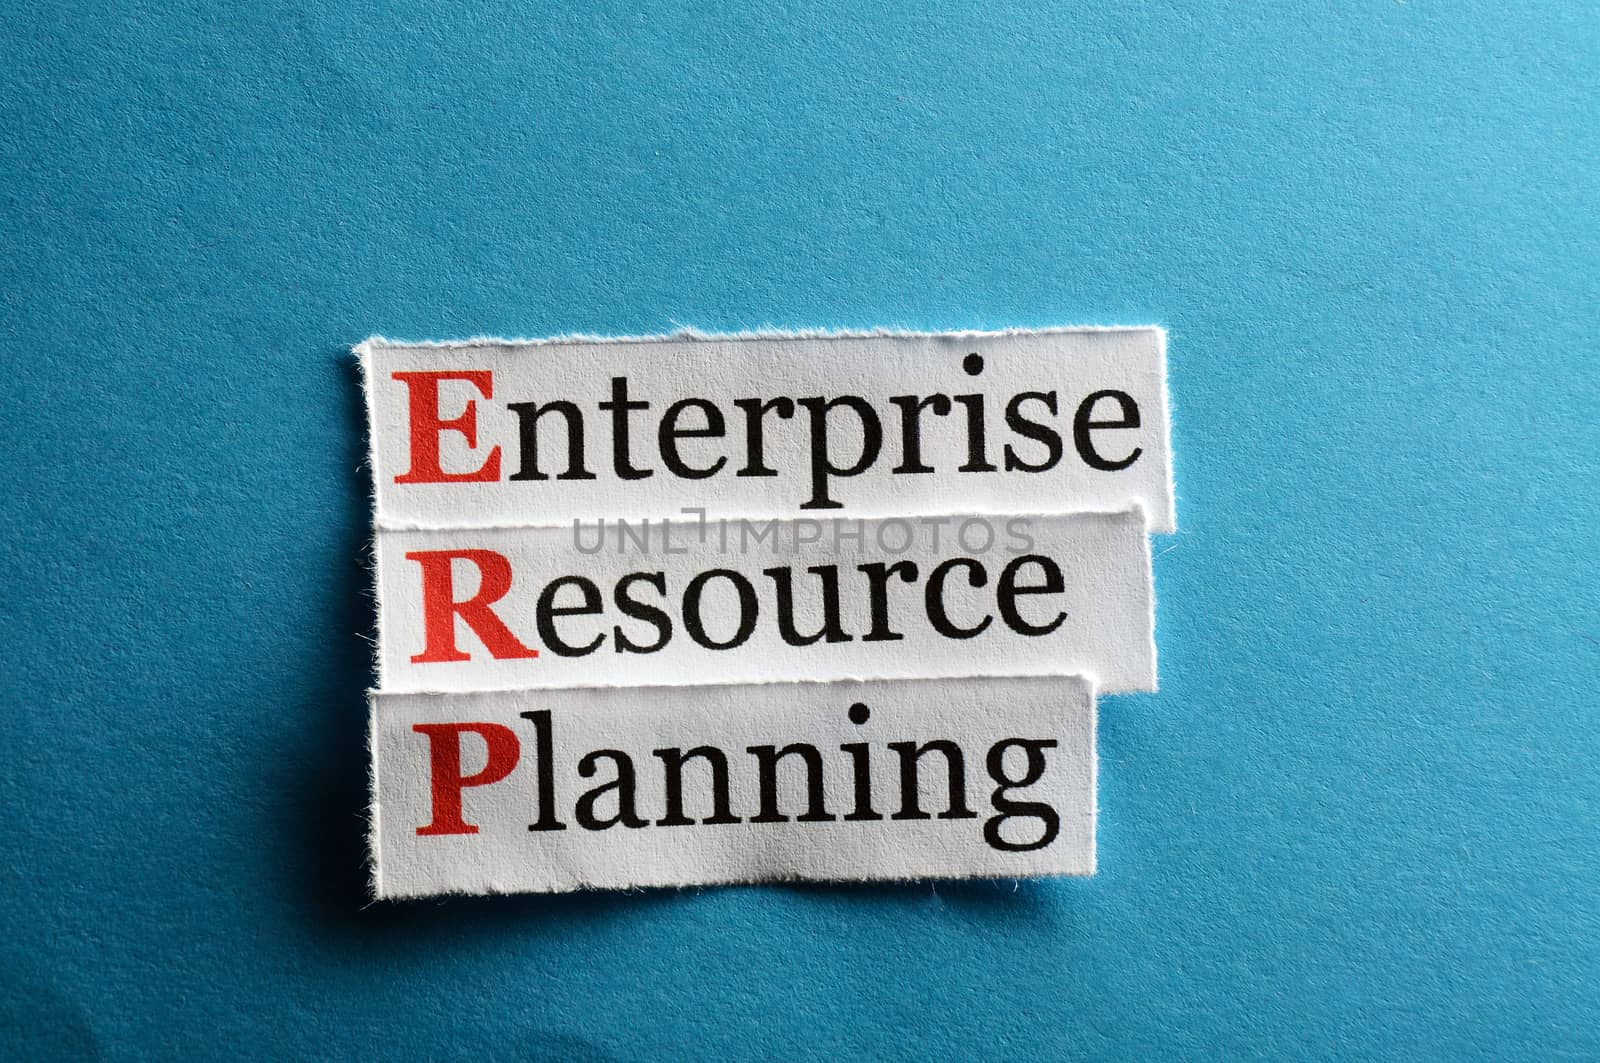 erp - enterprise resource planning on blue paper